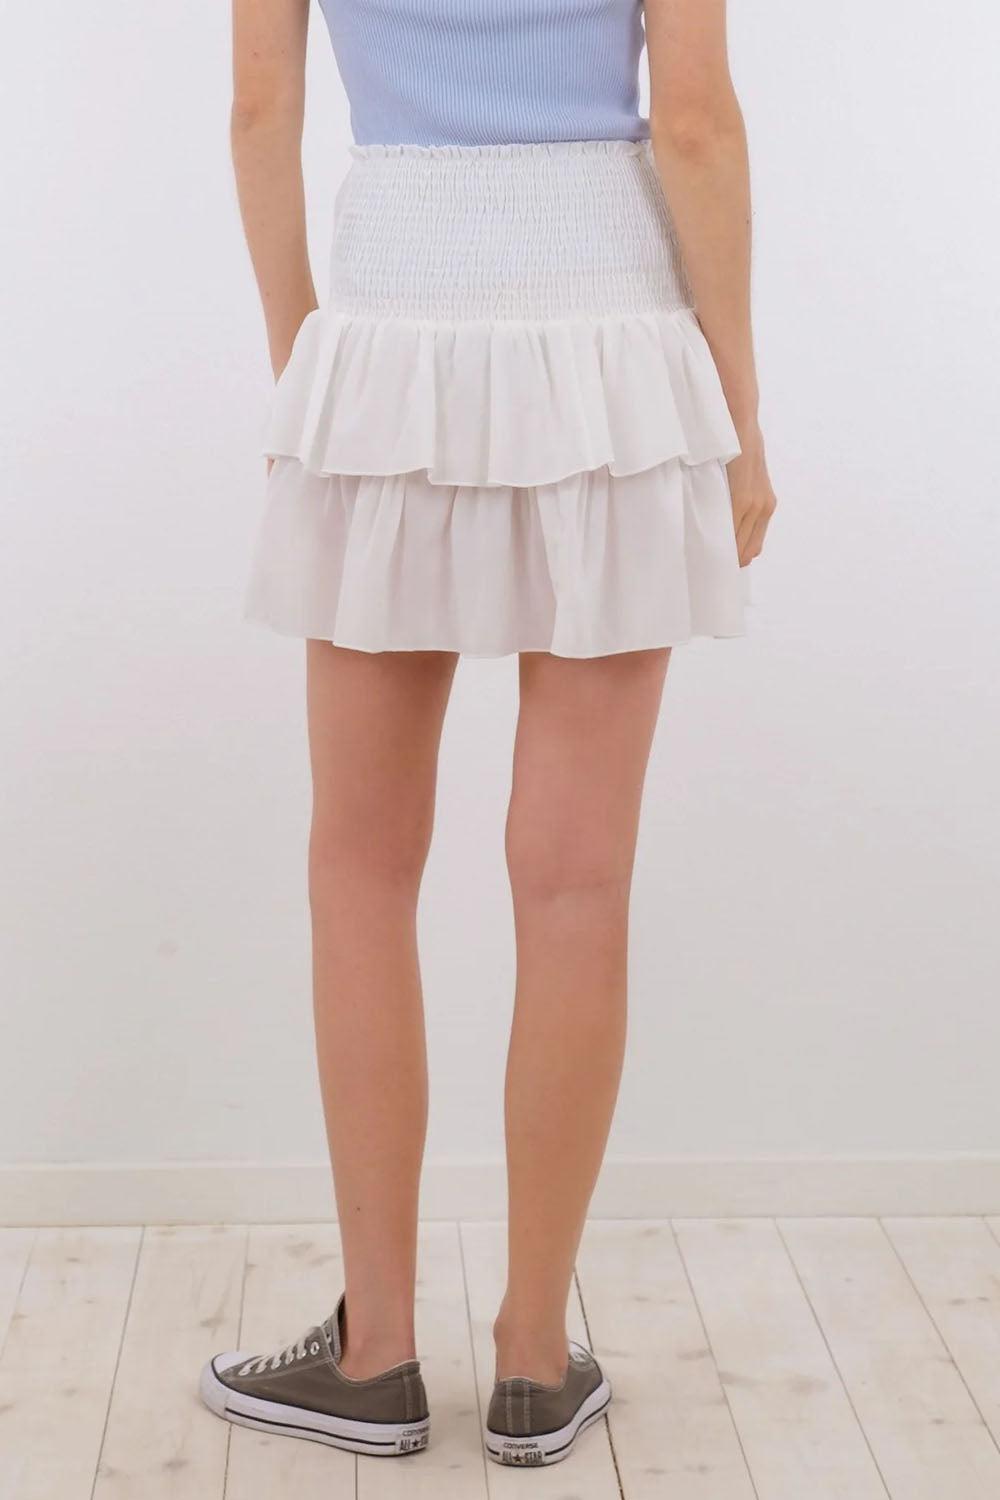 Carin R Skirt White